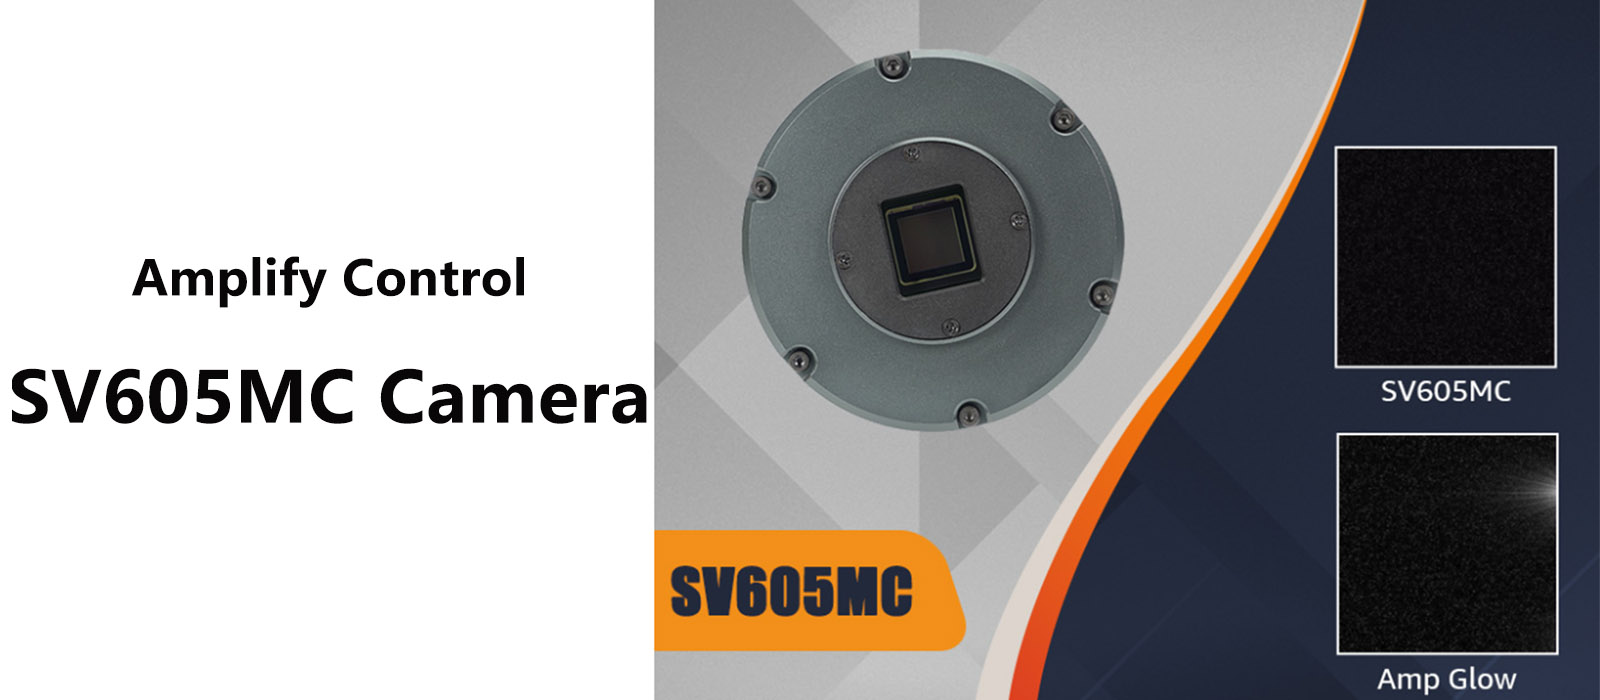 sv605mc camera with amplify control.jpg